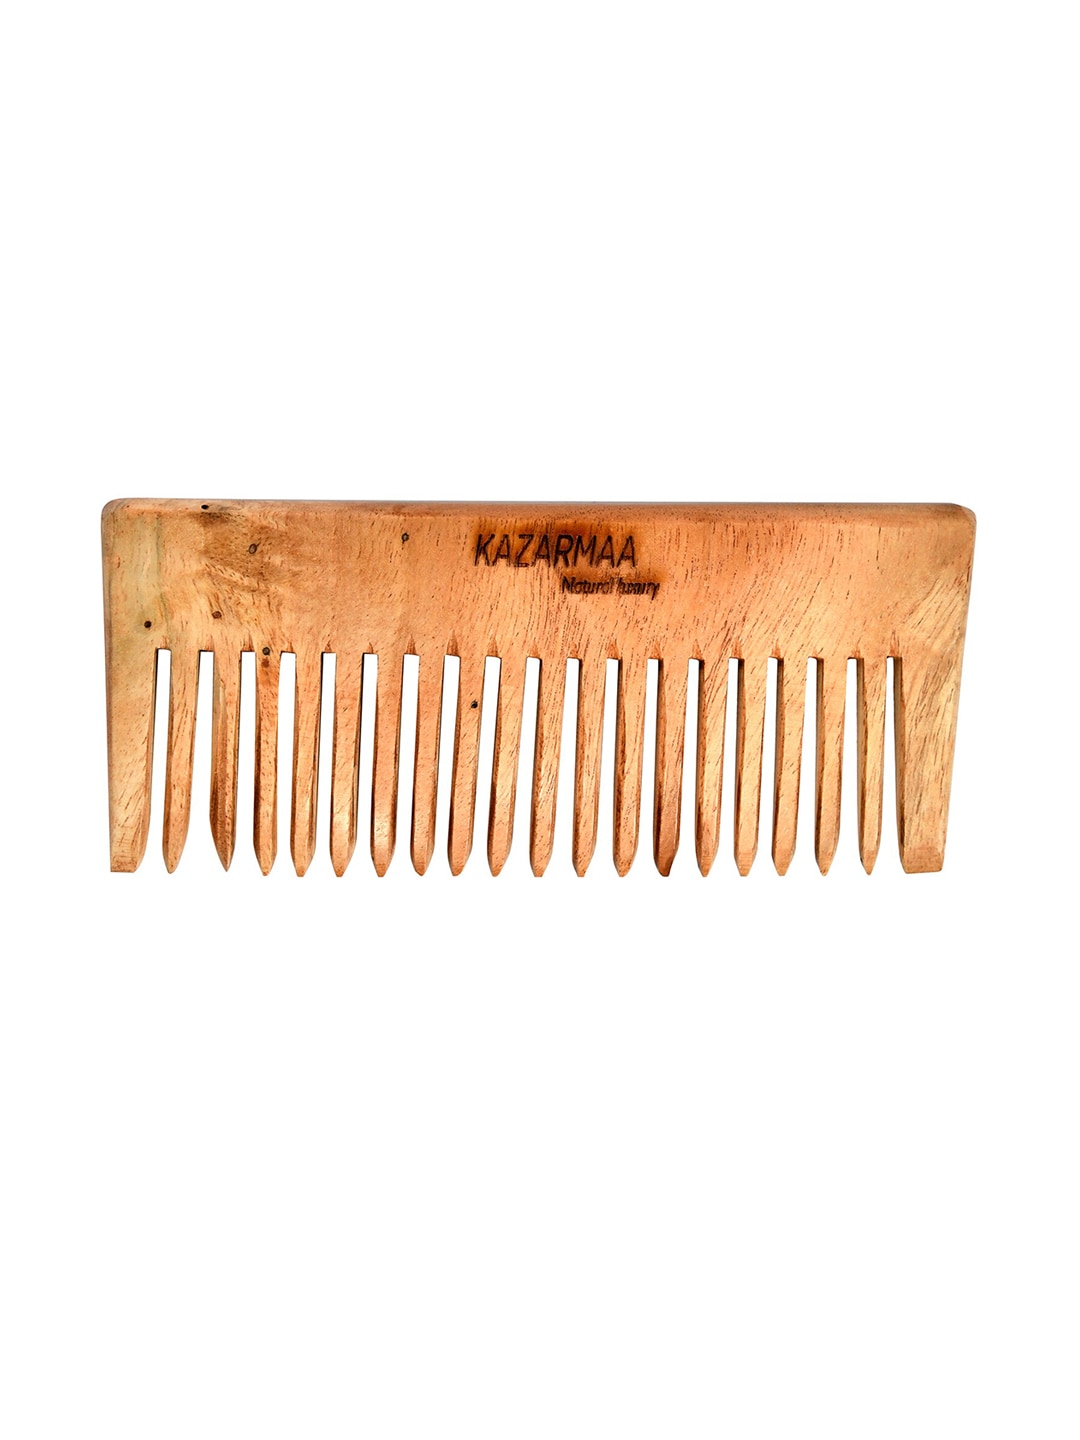 KAZARMAA Pure Organic 100% Natural Neem Wood Comb Price in India